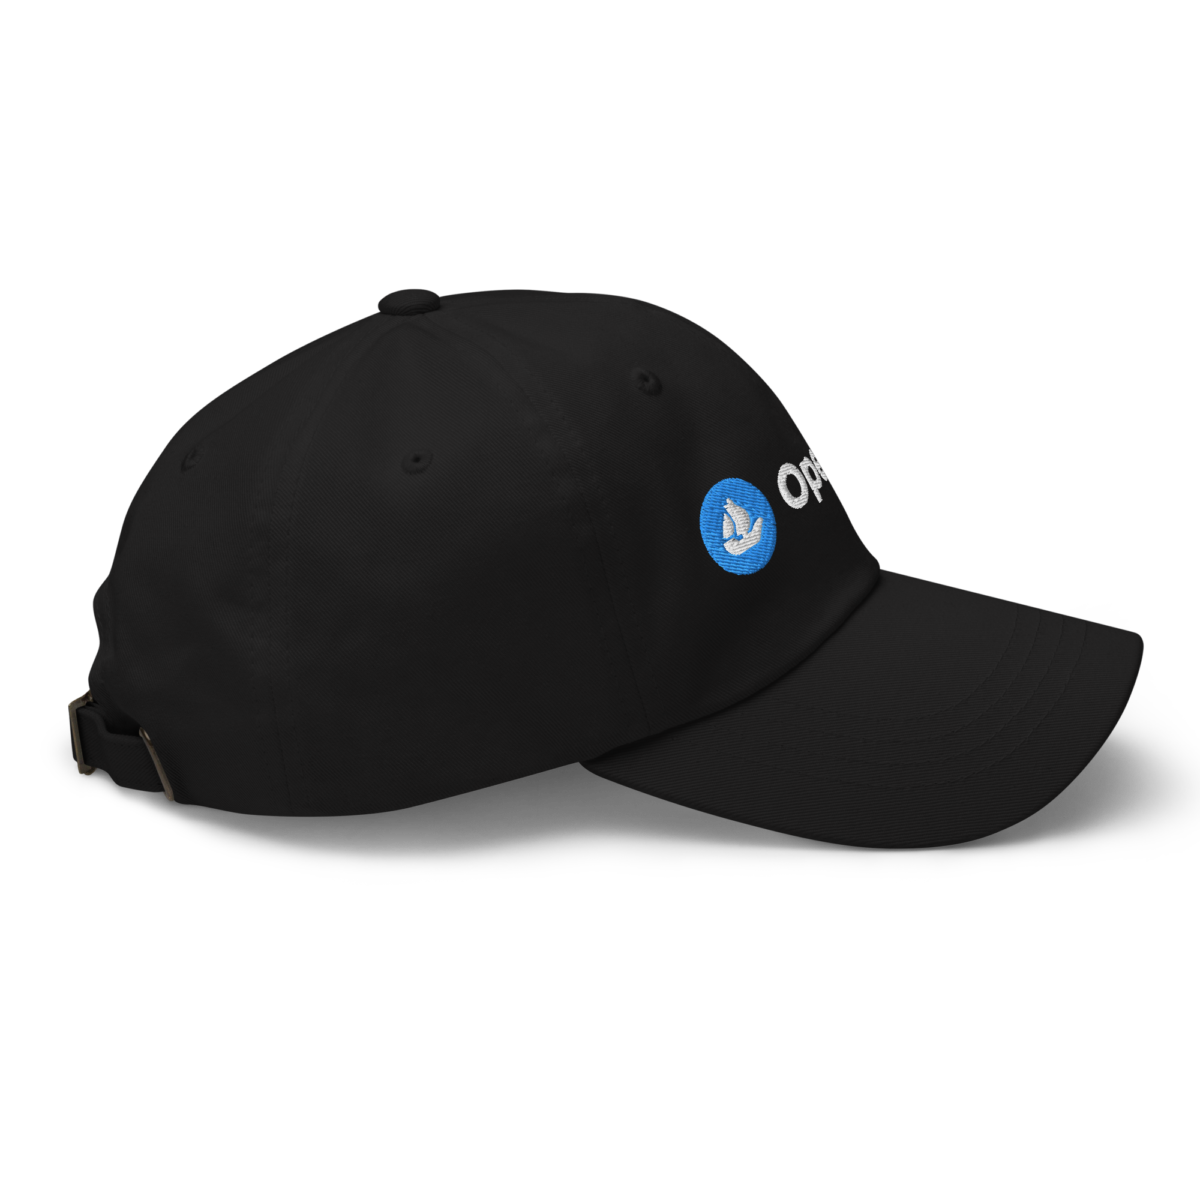 classic dad hat black right side 63a35b328a0e5 - Opensea Baseball Cap